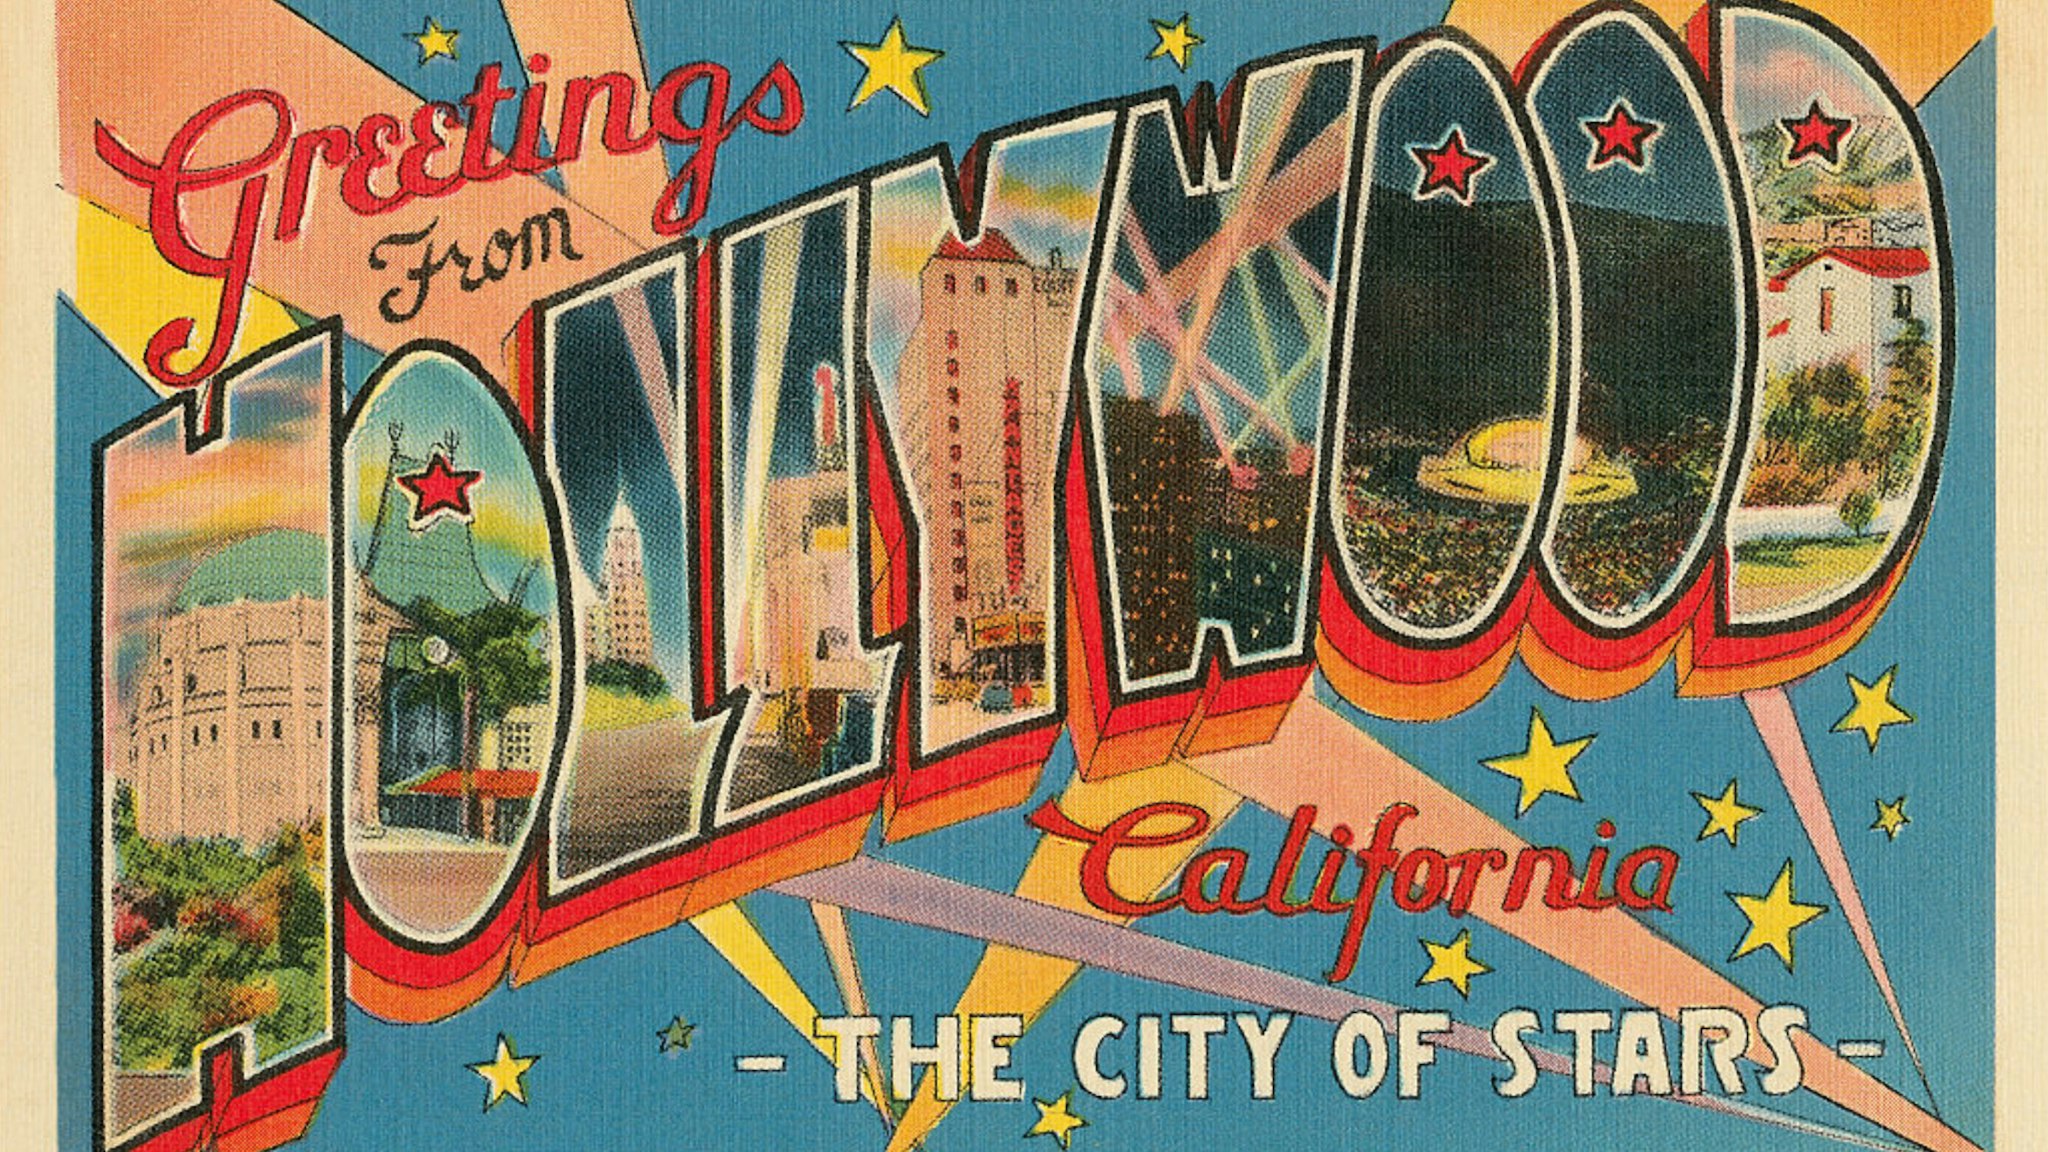 Vintage illustration of Greetings from Hollywood, California large letter vintage postcard, 1930s.